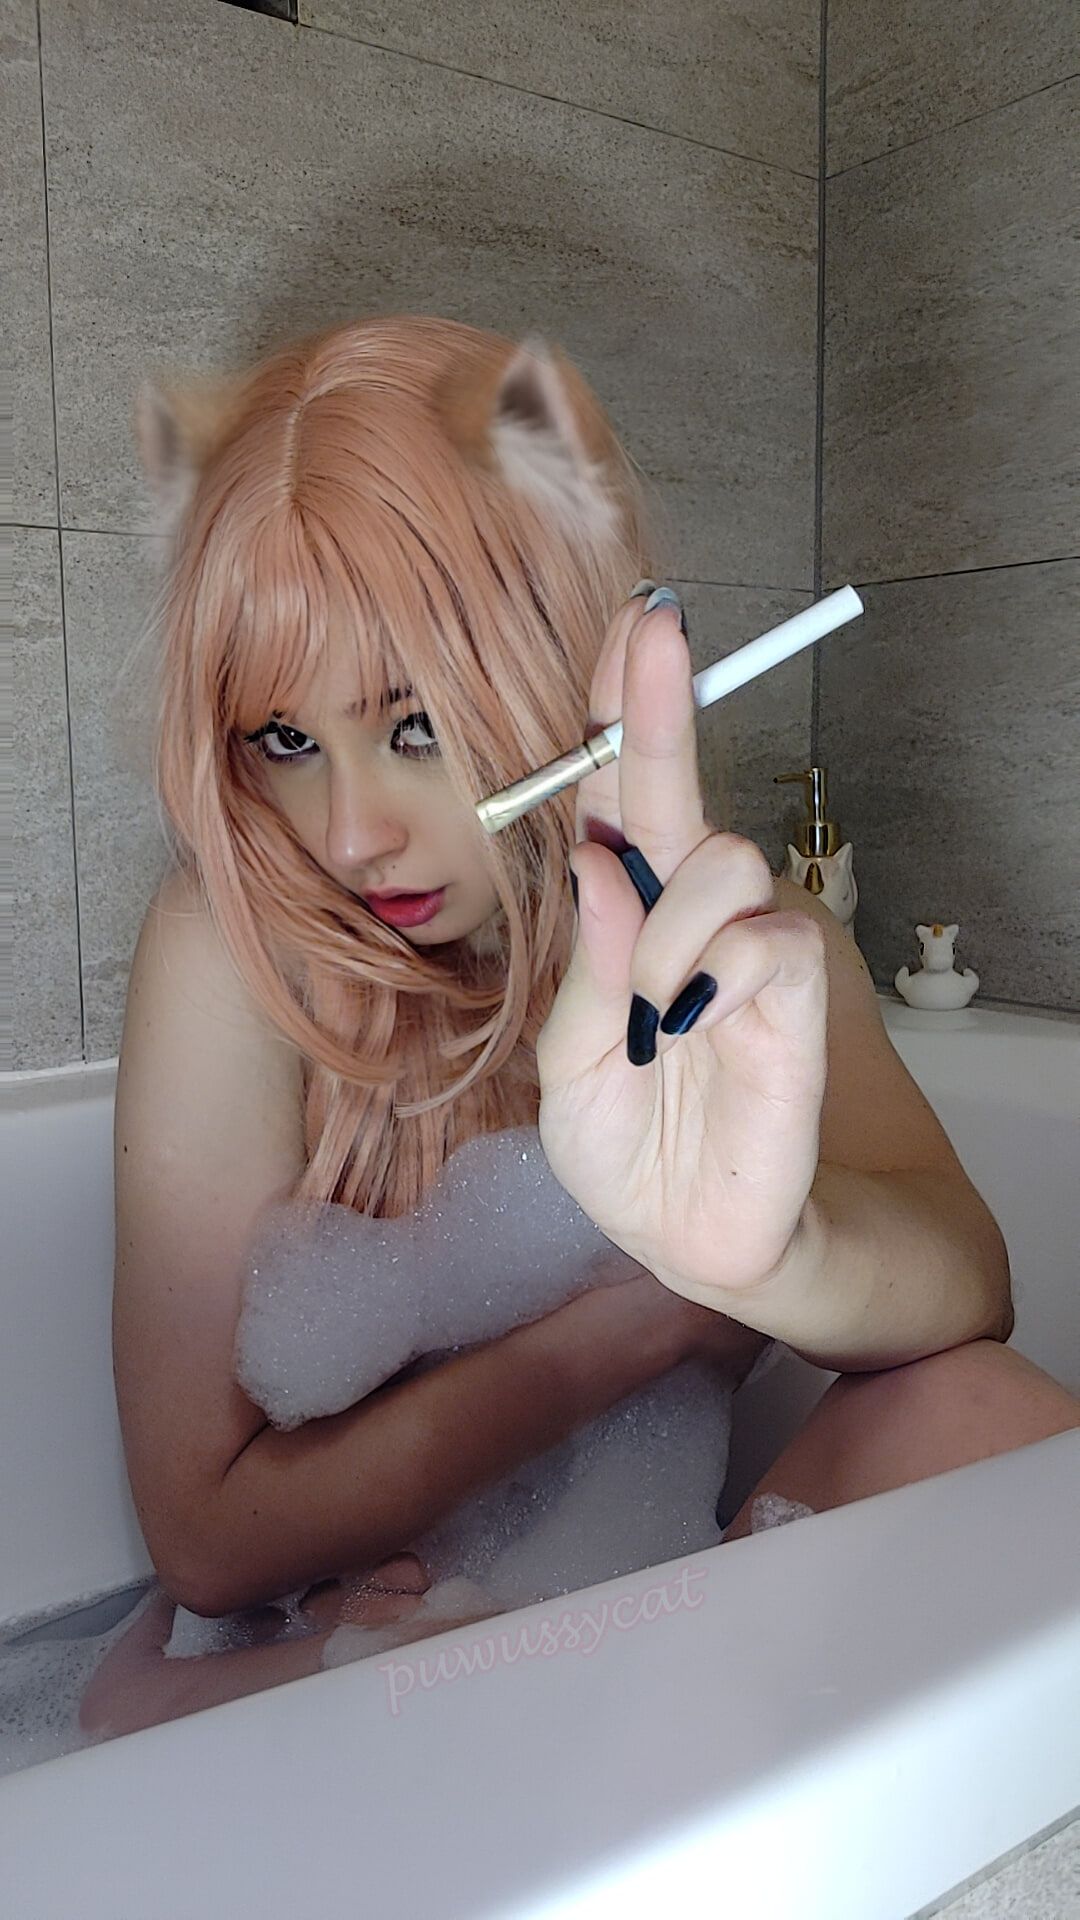 Egirl smoking in bathtub with bubbles #3